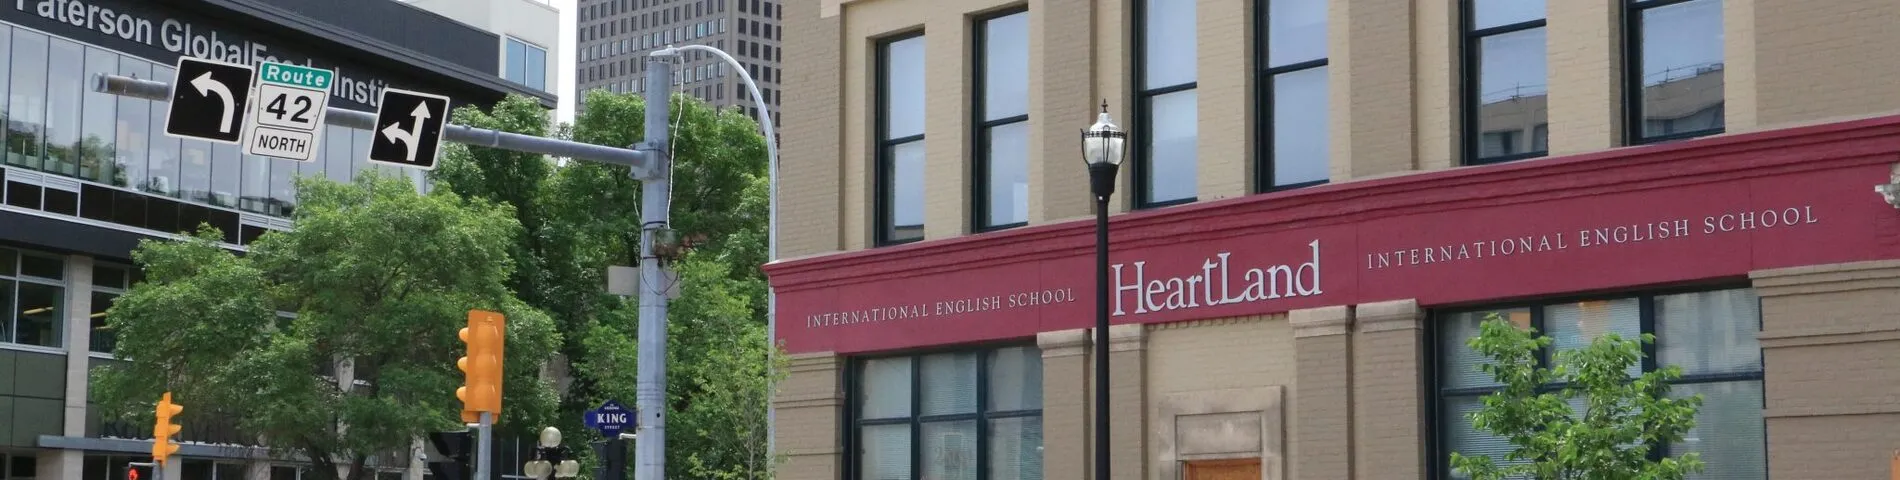 Heartland International English School billede 1